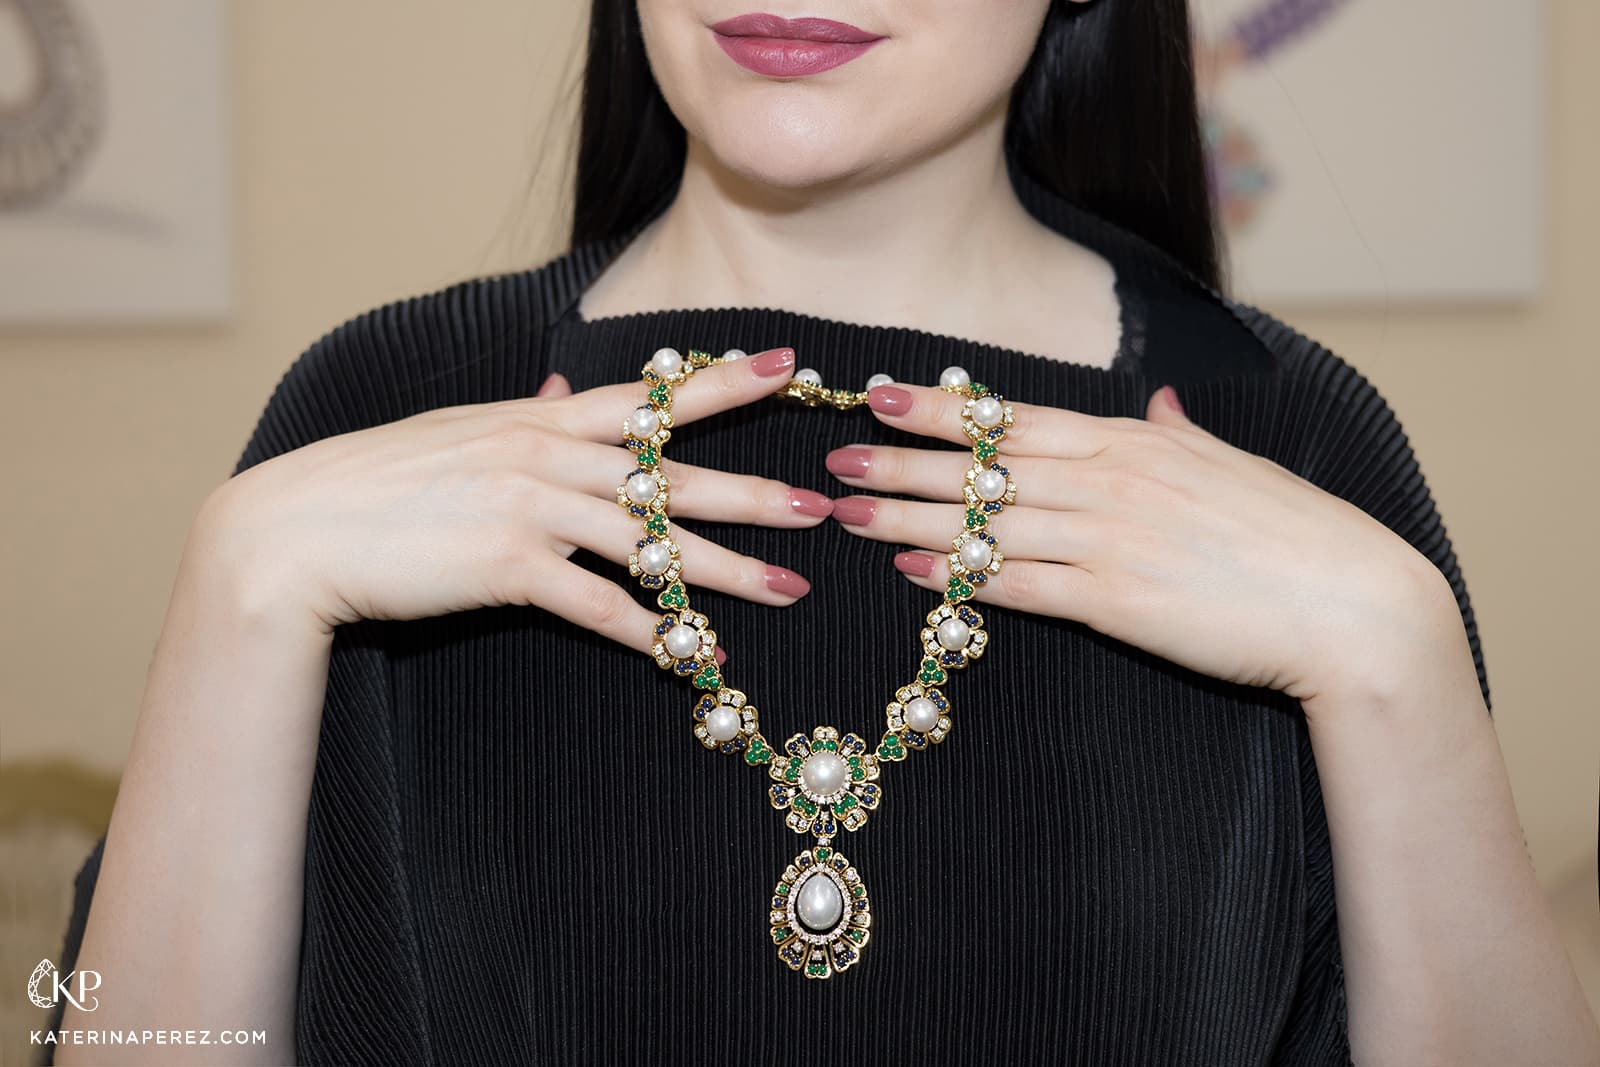 Veschetti Dea necklace with pearls, sapphires, emeralds and diamonds